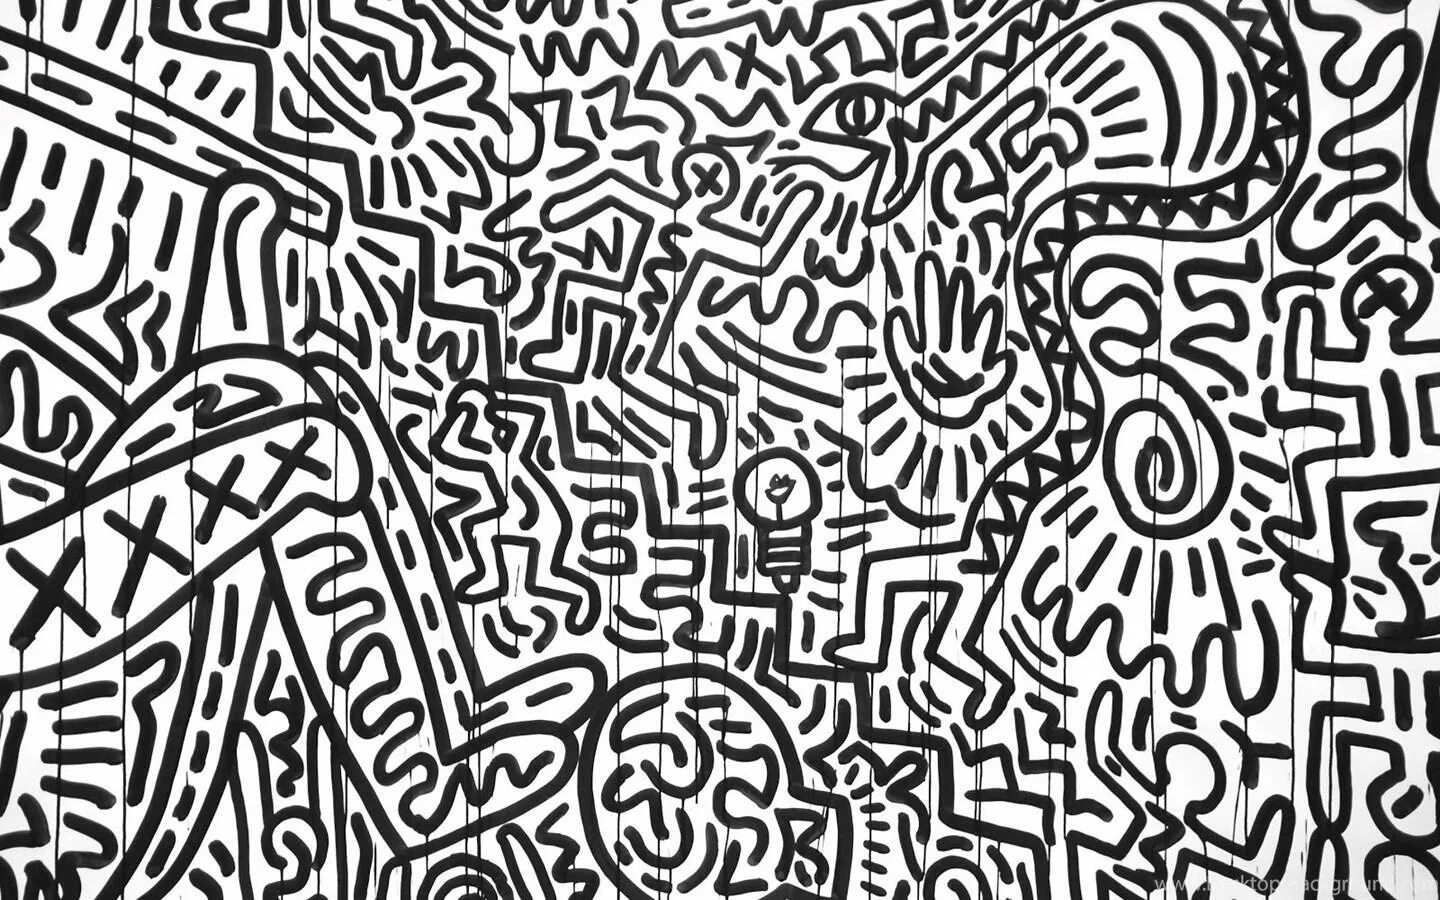 Кит харинг произведения. Кейт Херинг. Кит Харинг Labyrinth. Кит Харинг граффити. Кит Харинг американский художник.